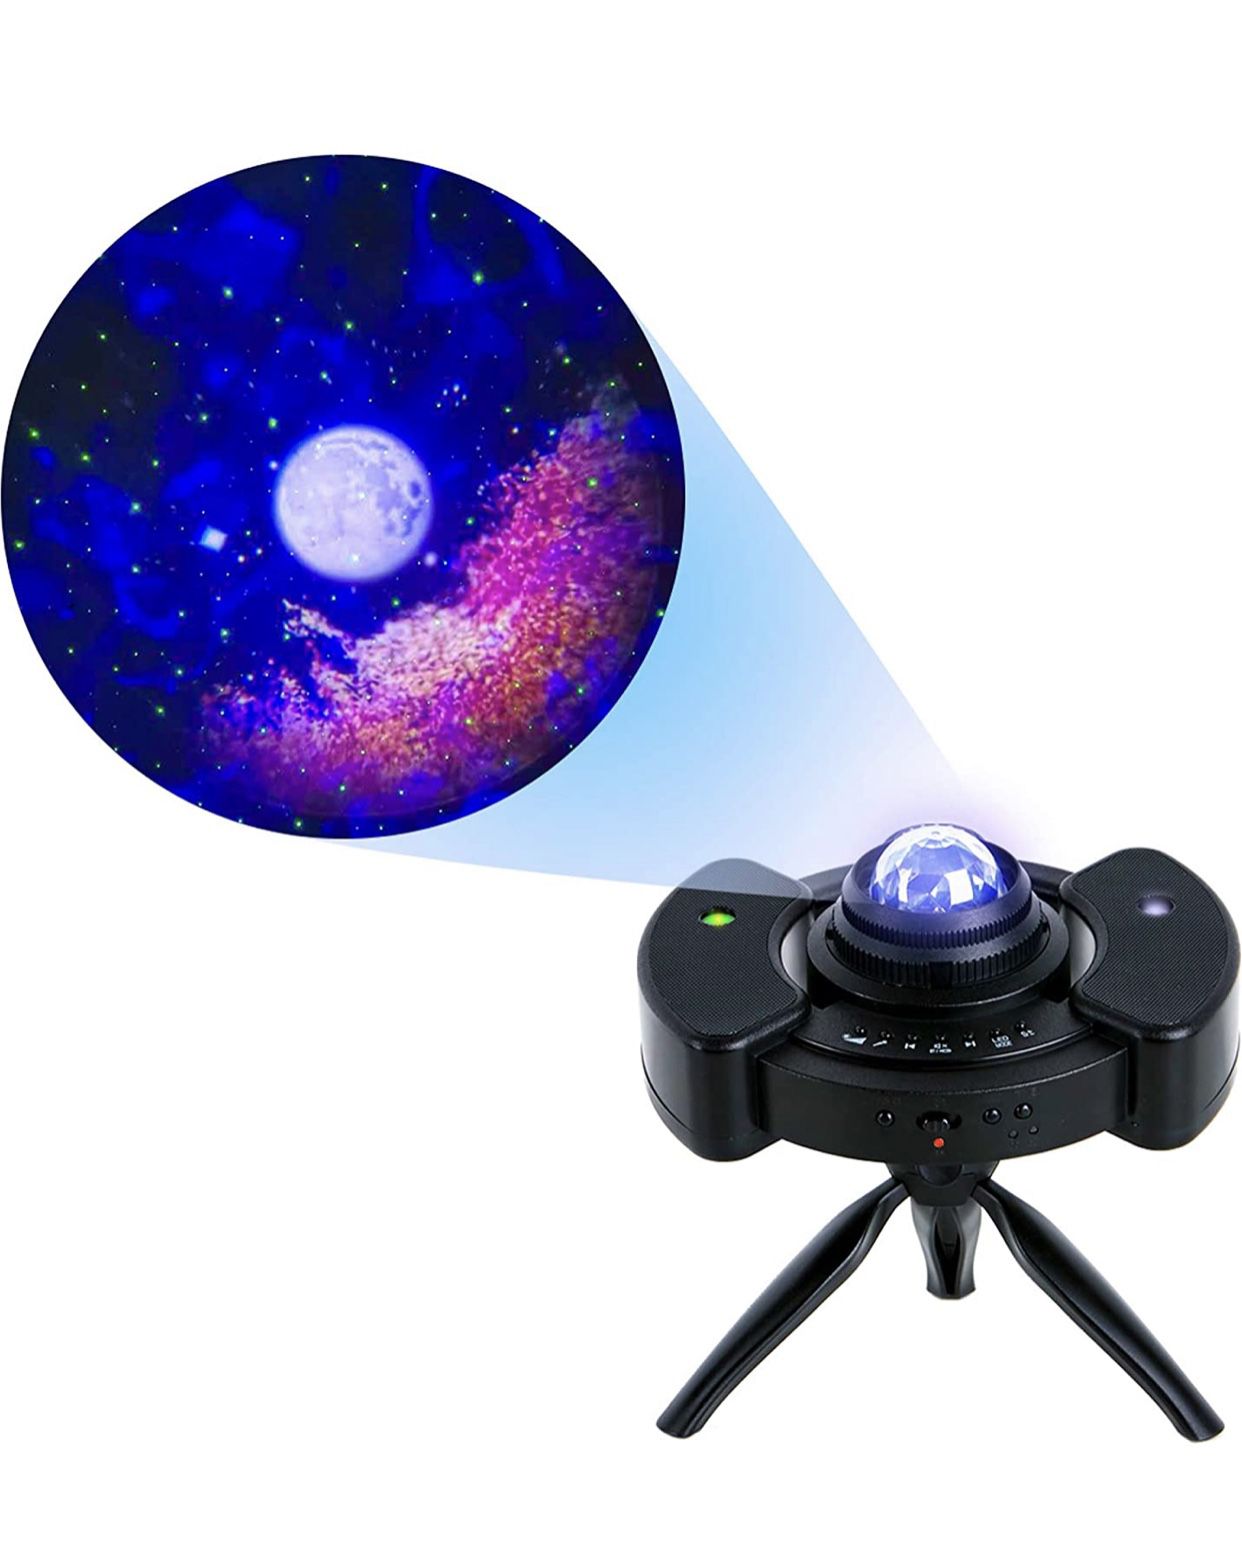 Star projector